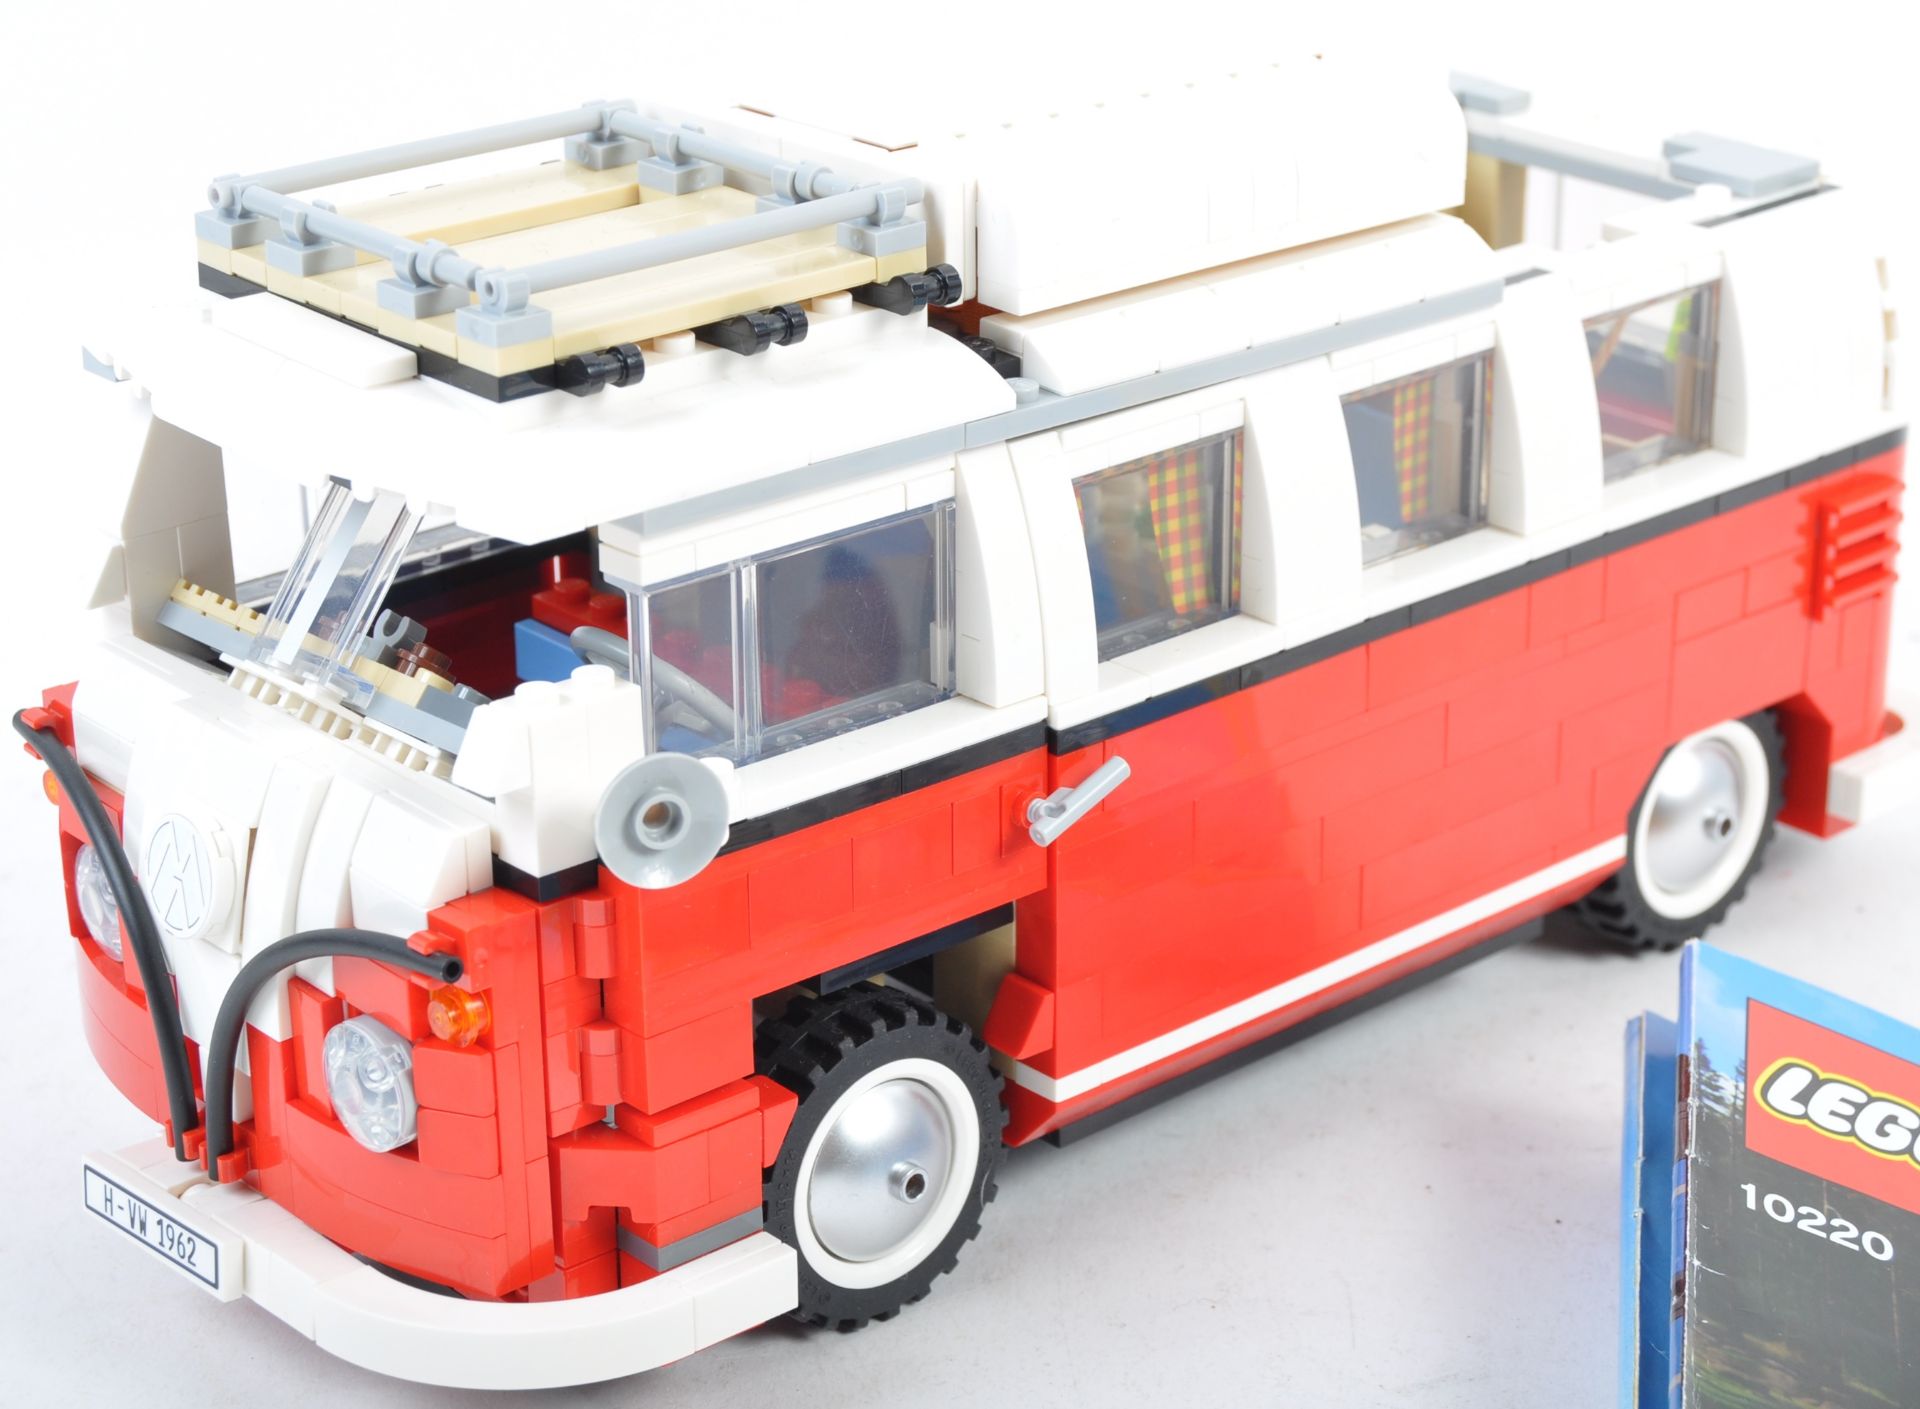 LEGO SET - LEGO EXPERT - 10220 - VOLKSWAGON T1 CAMPER VAN - Image 3 of 4